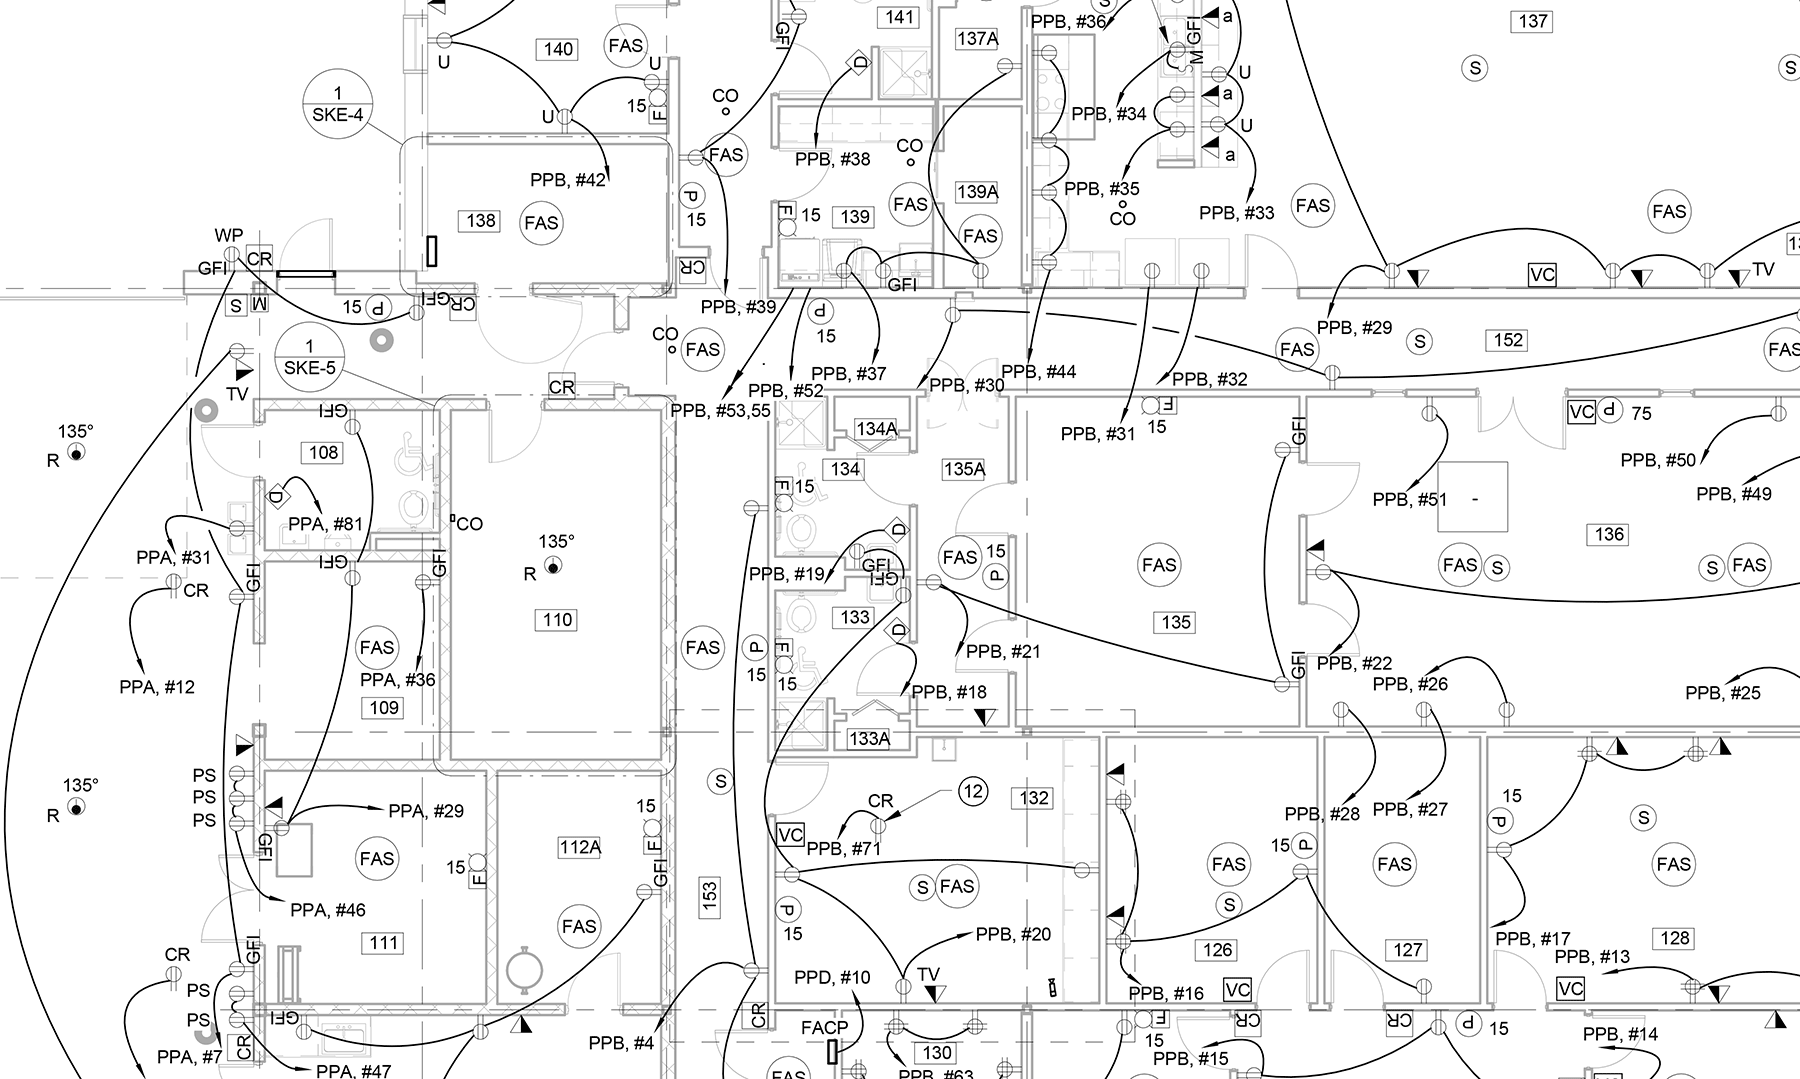 Electrical Floor Plan, detail